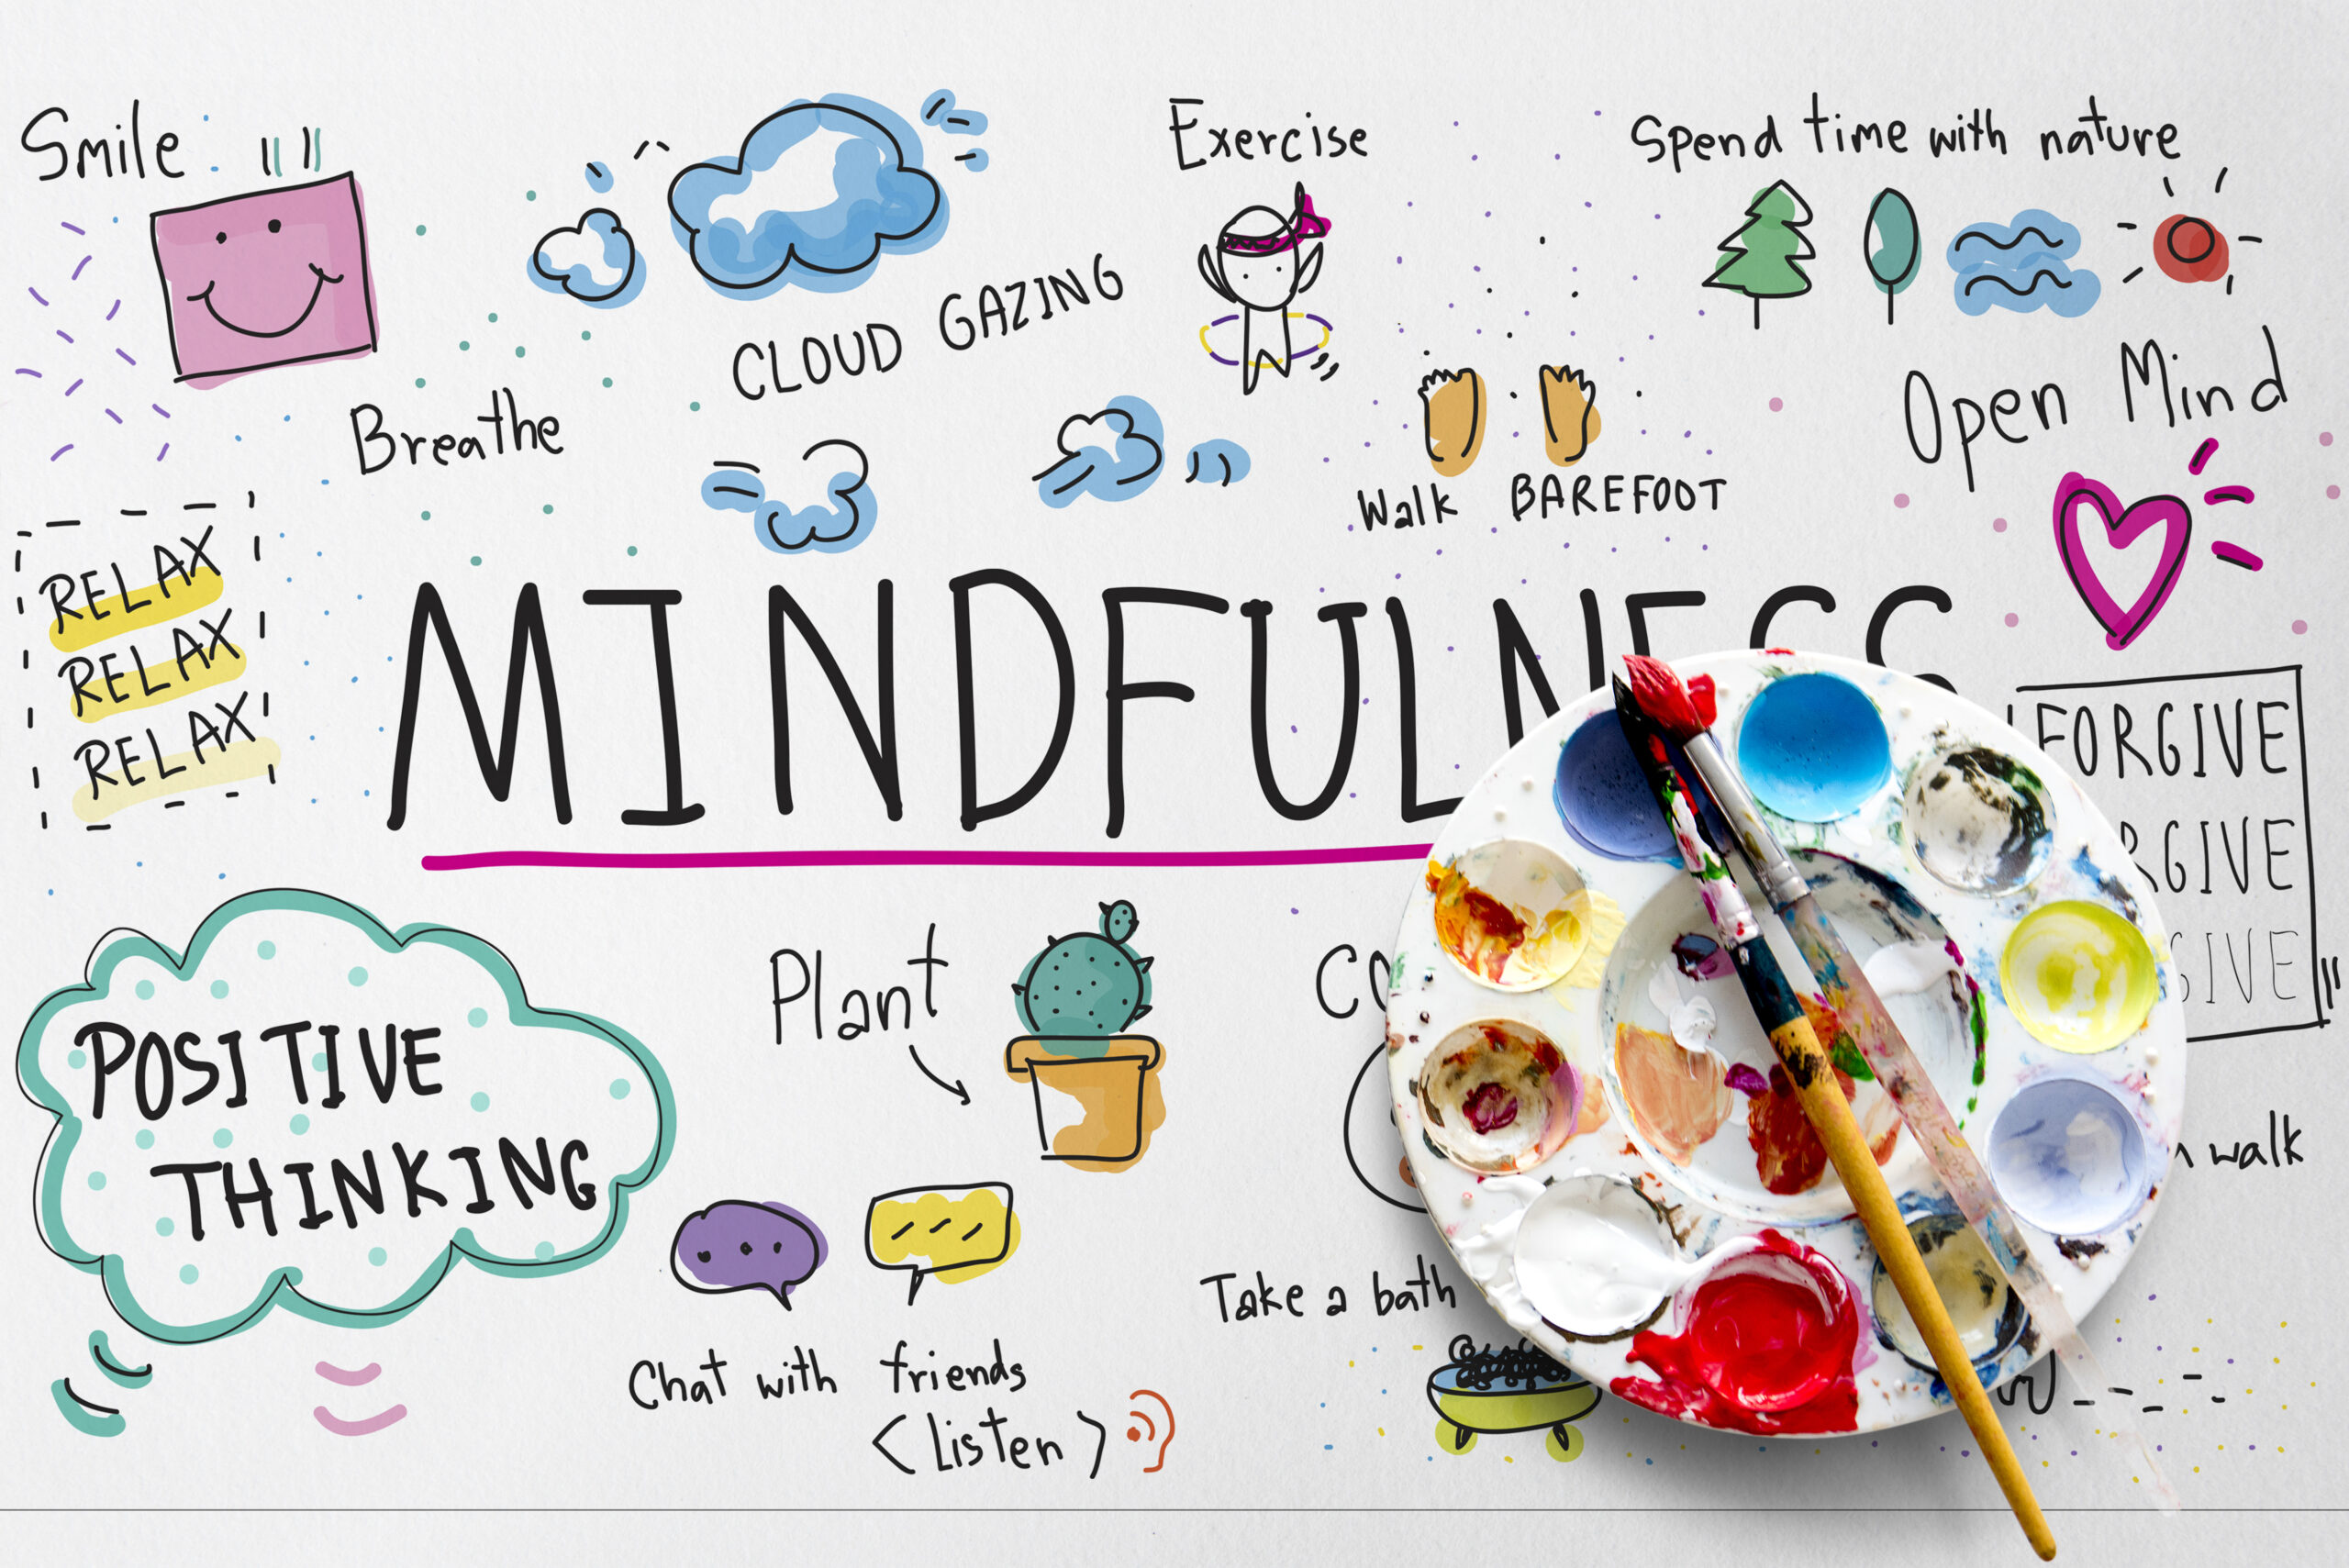 Illustration of mindfulness leisure art activity